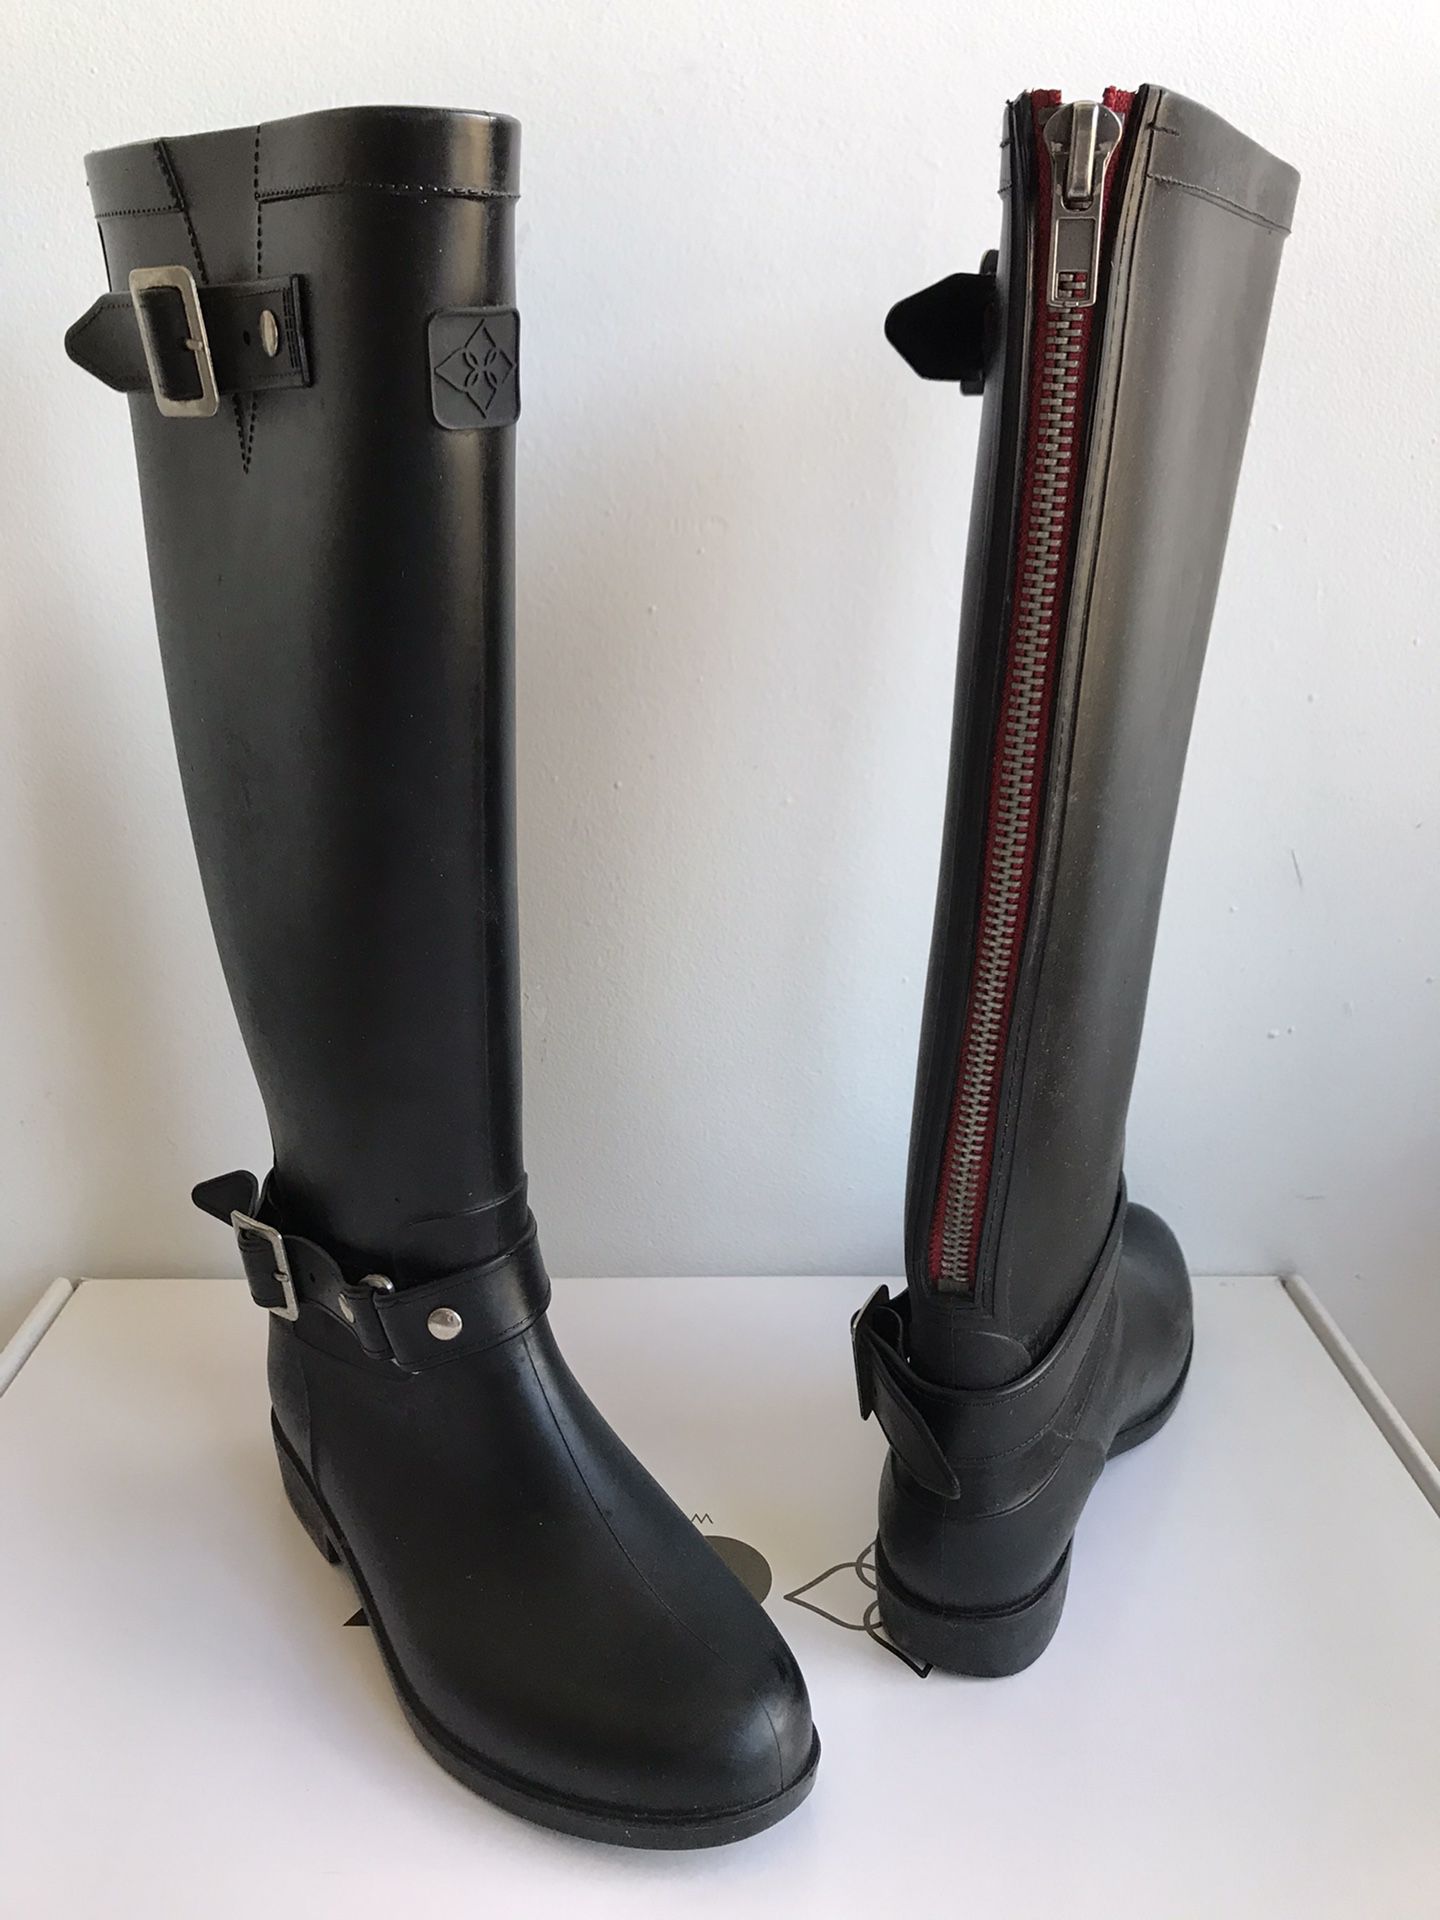 Equestrian tall Rain boots, Dav, SIZE US 6 / EU 36